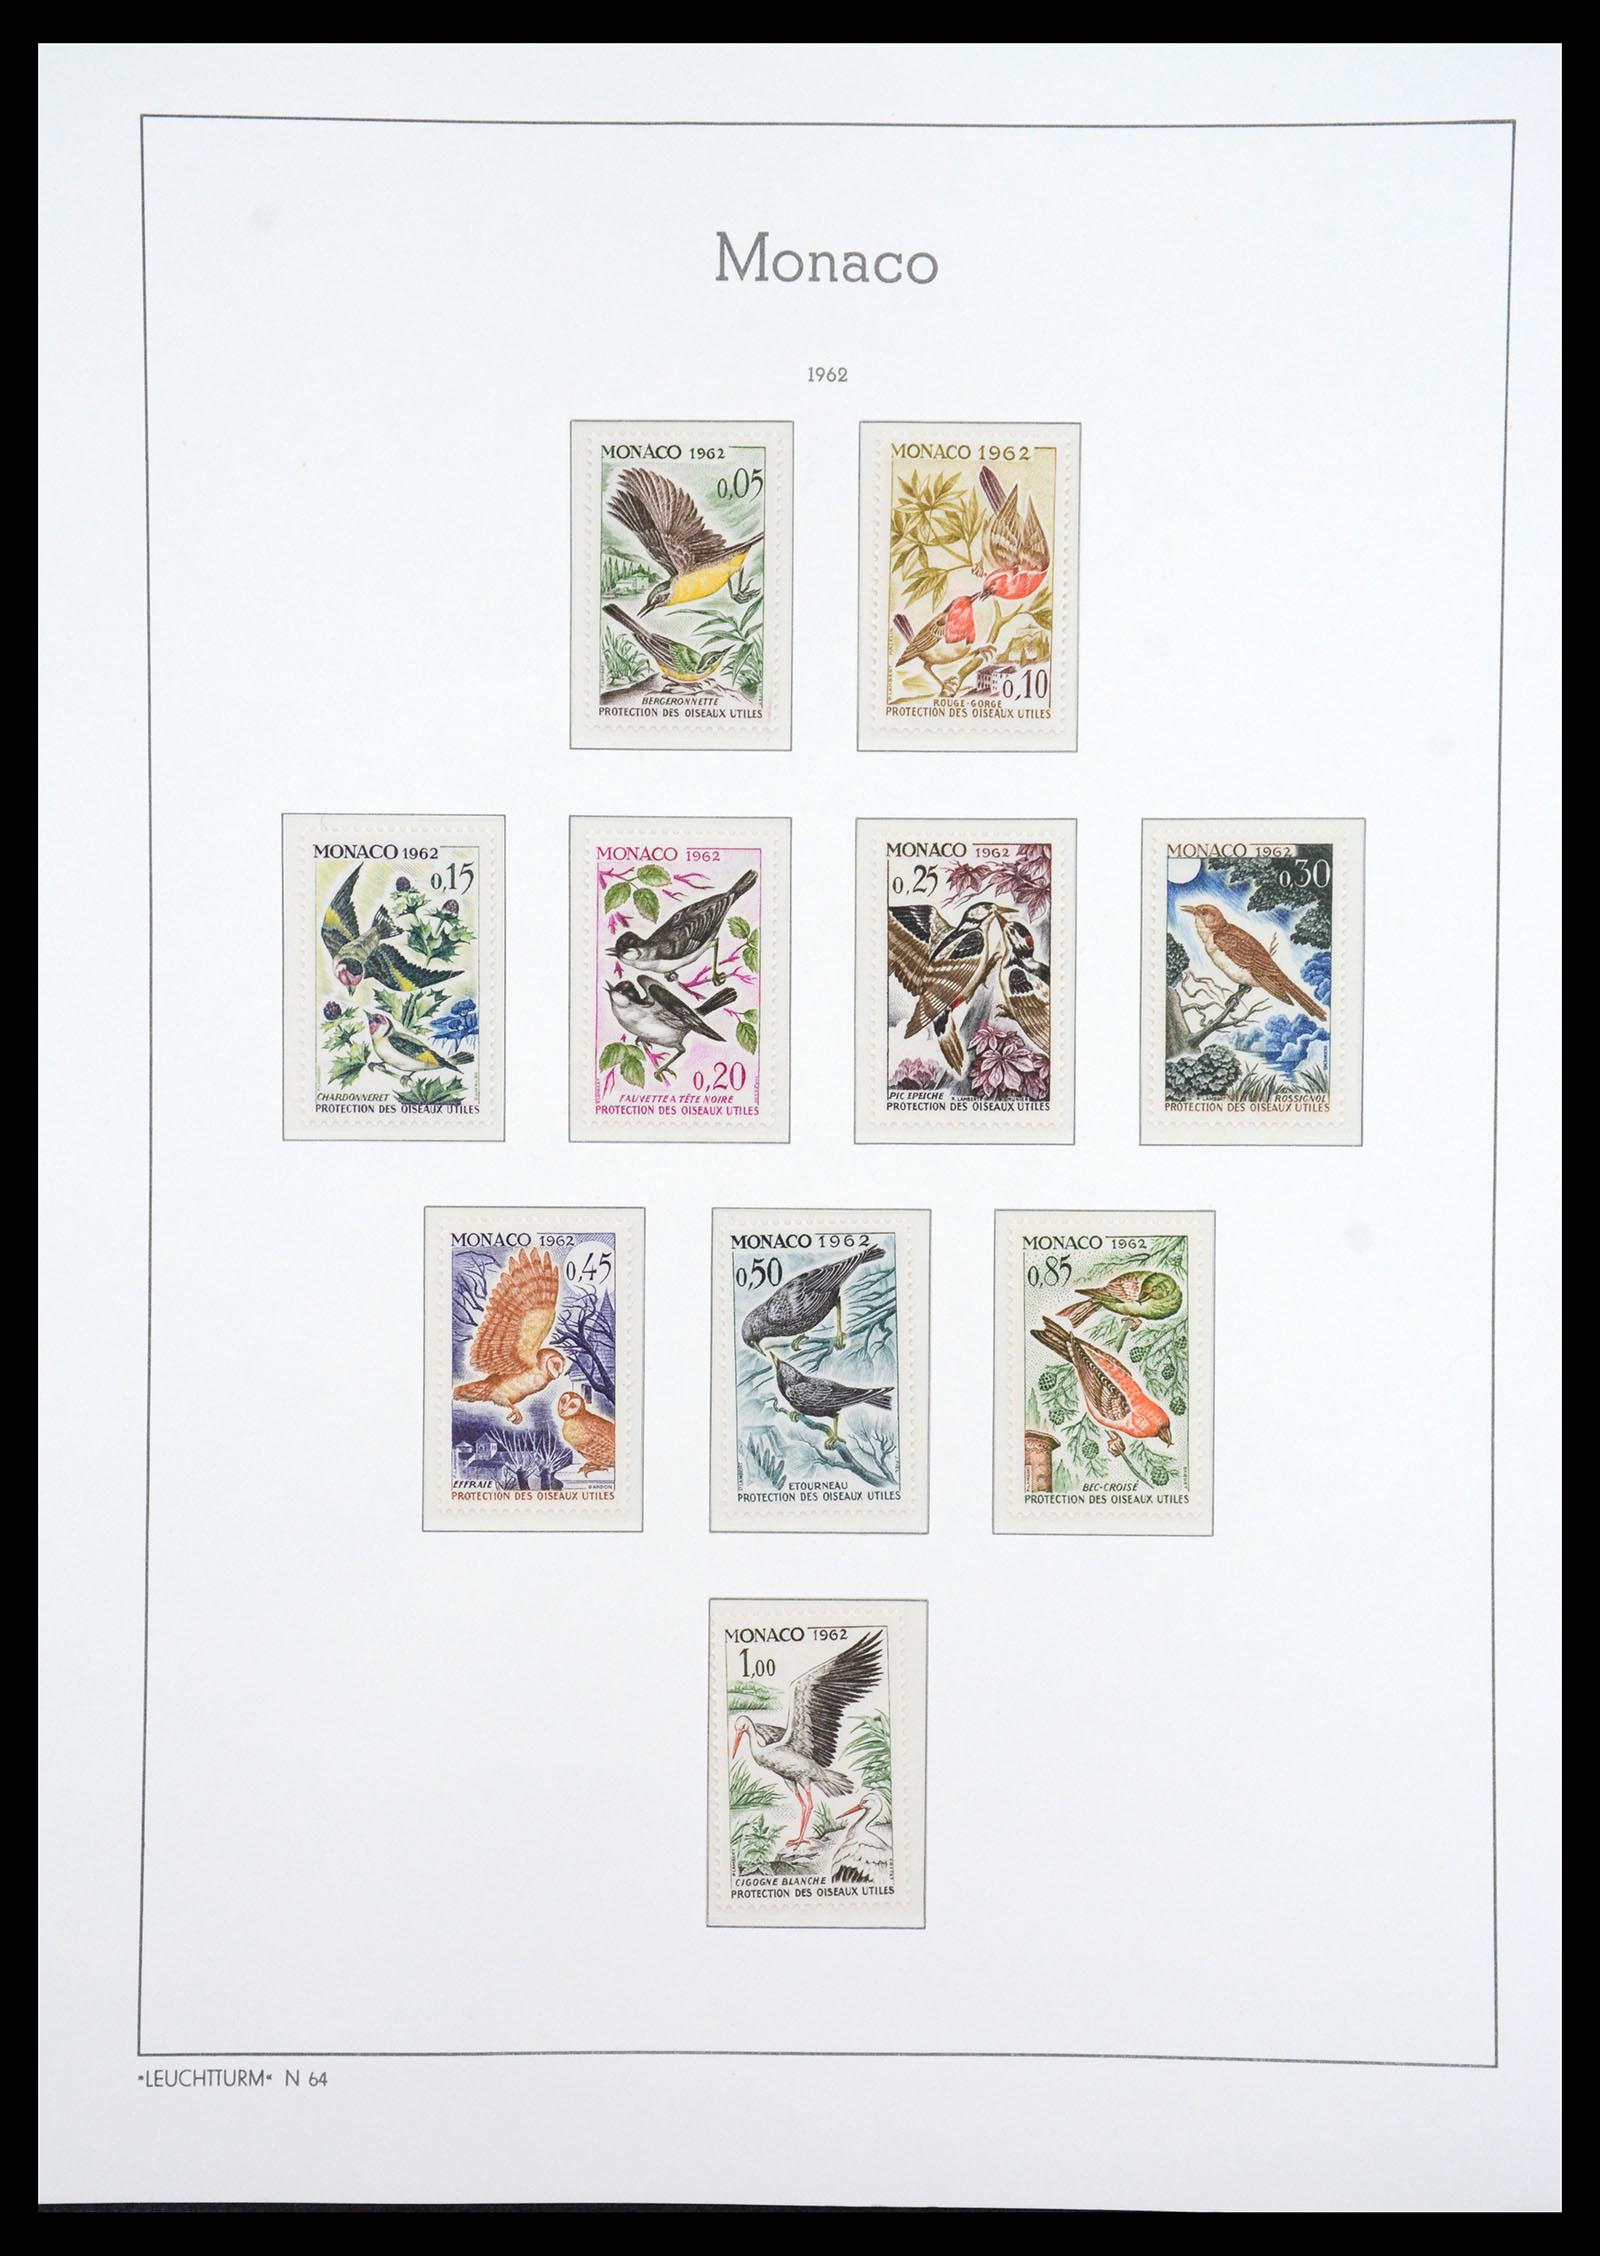 36735 080 - Stamp collection 36735 Monaco 1885-1966.